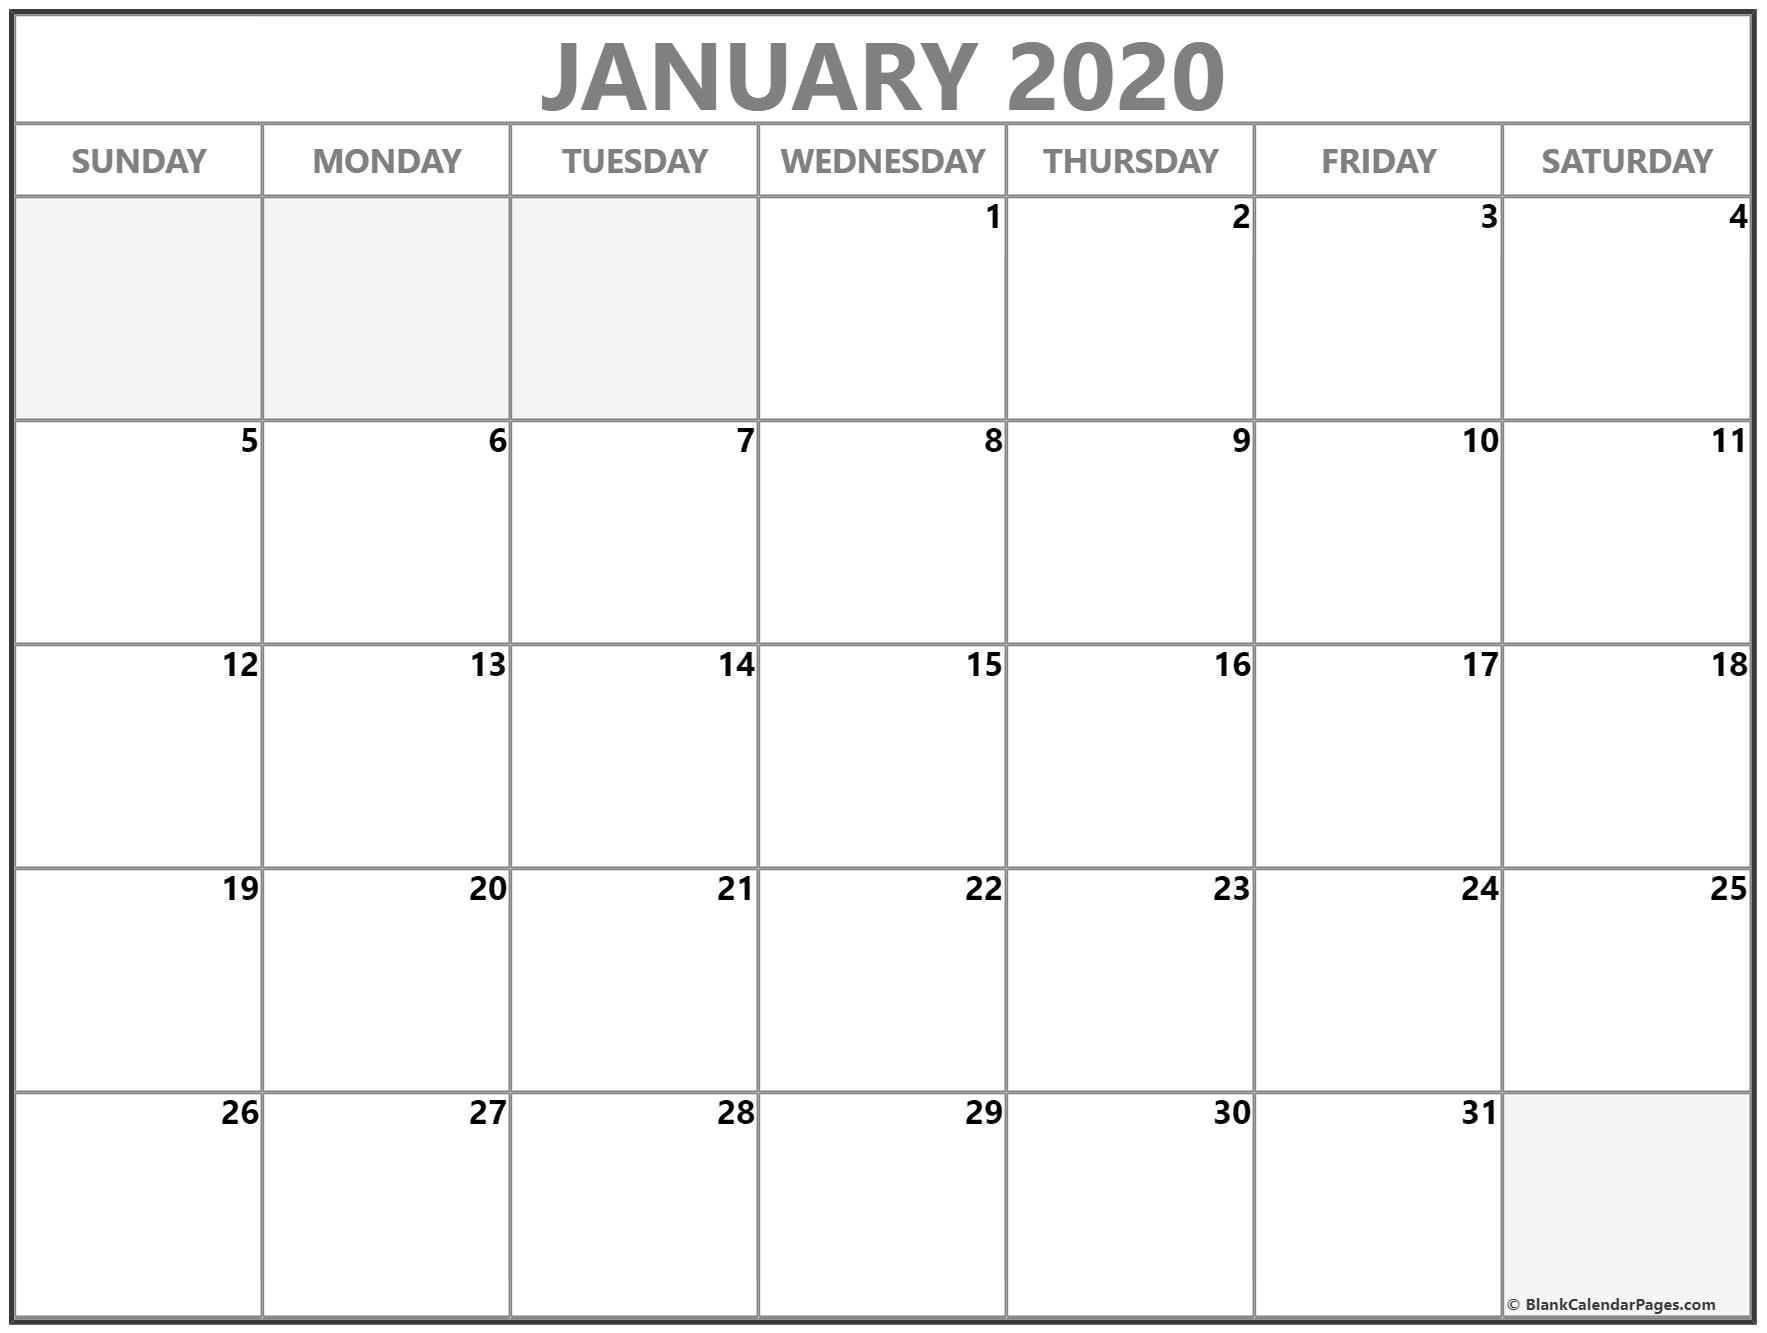 January 2020 Calendar | Free Printable Monthly Calendars Dashing Printable Monthly Calendar With No Weekends